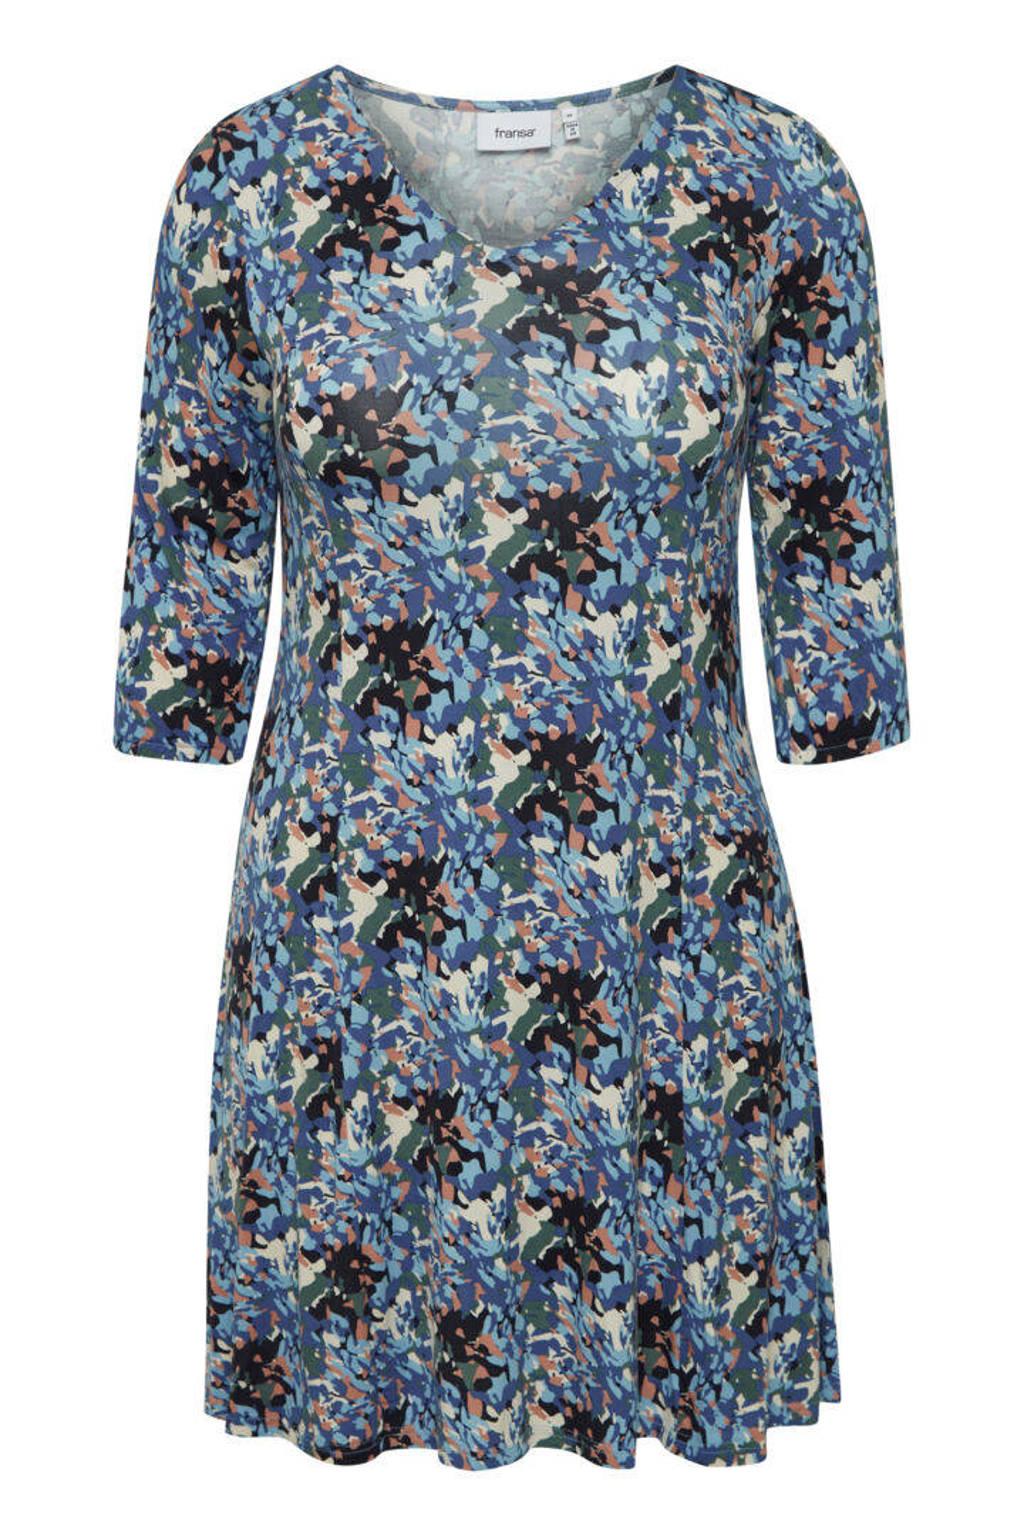 Fransa Plus Size Selection jurk met all over print blauw